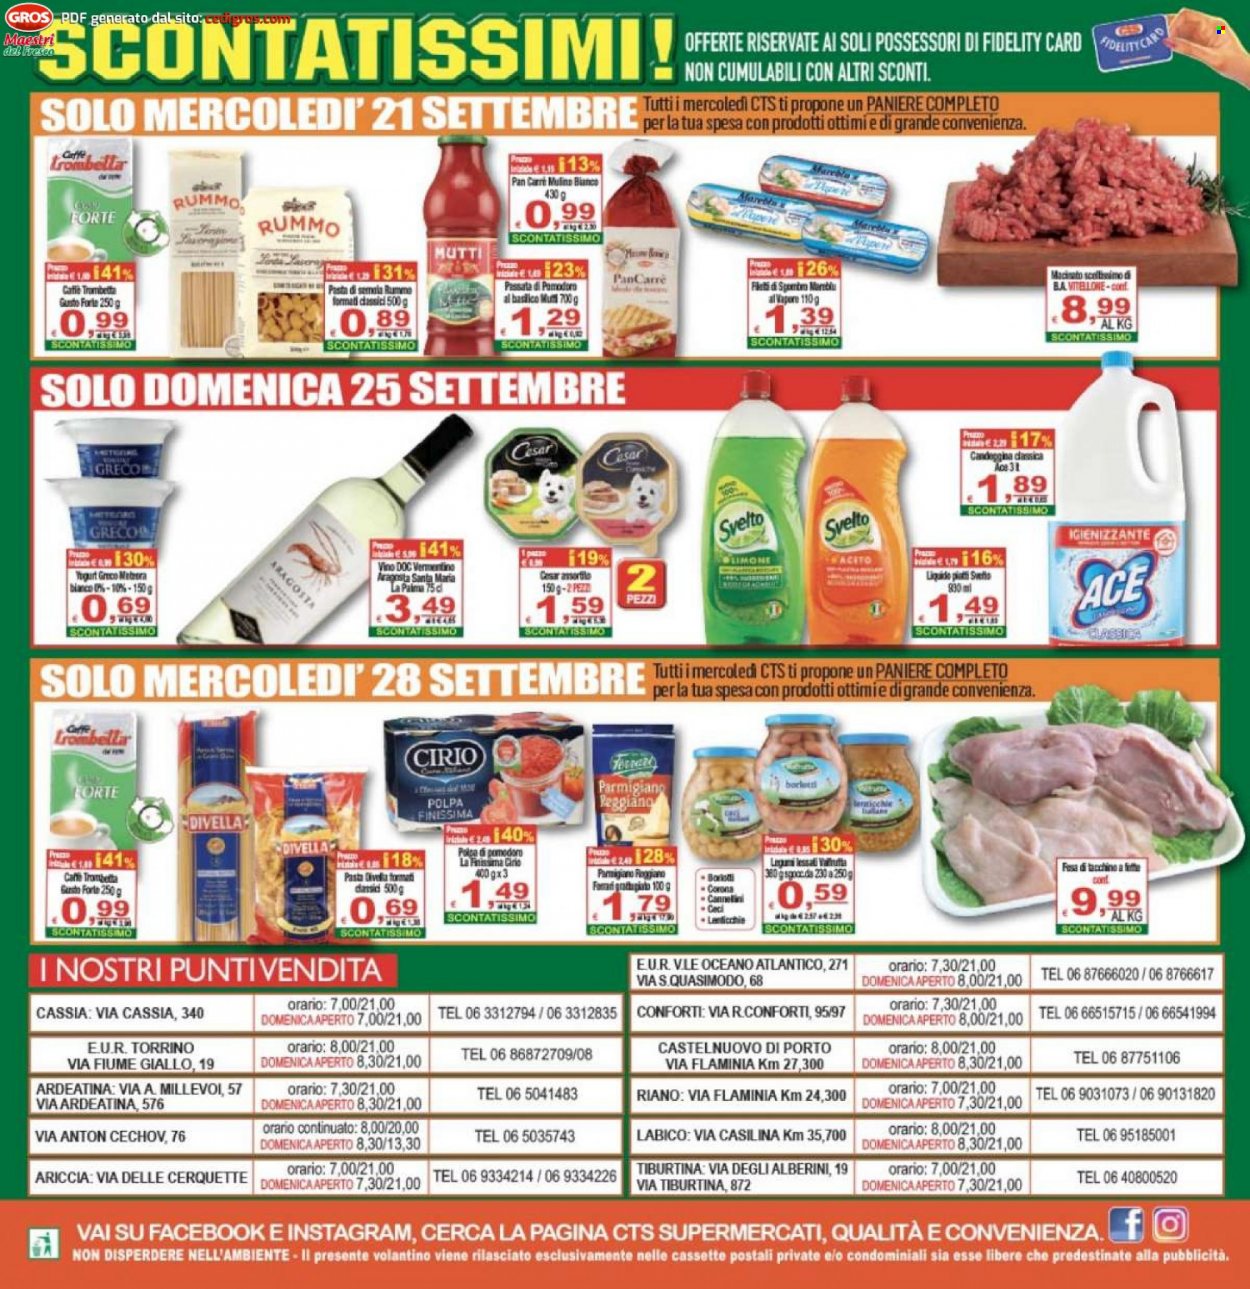 Volantino CTS supermercati - 21.9.2022 - 28.9.2022.